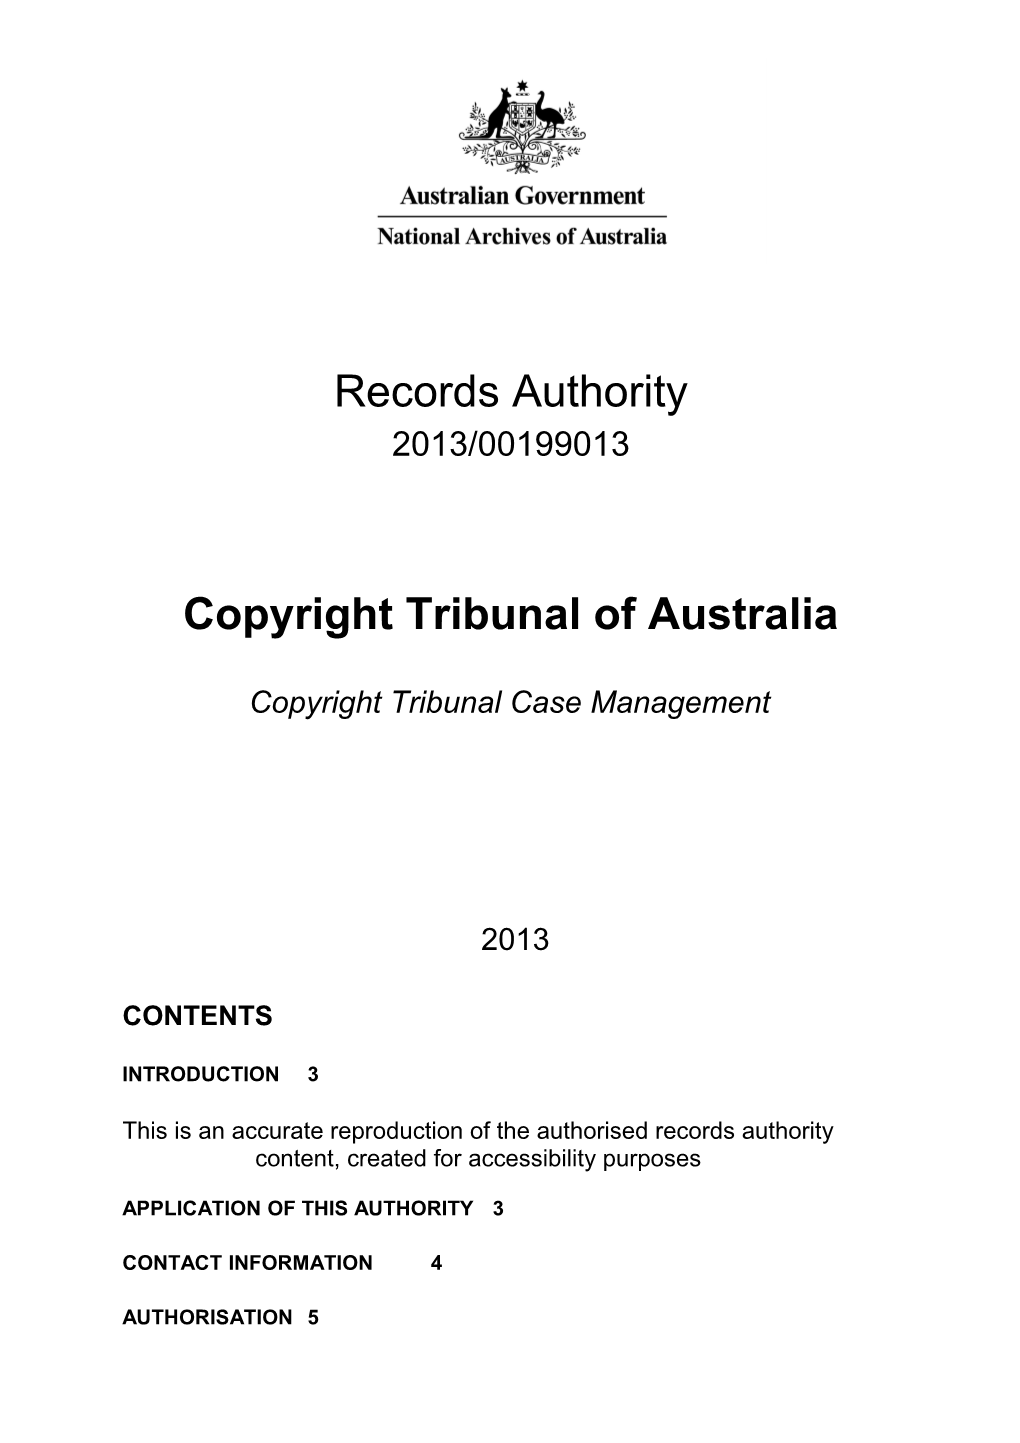 Copyright Tribunal of Australia - Records Authority 2013 00199013